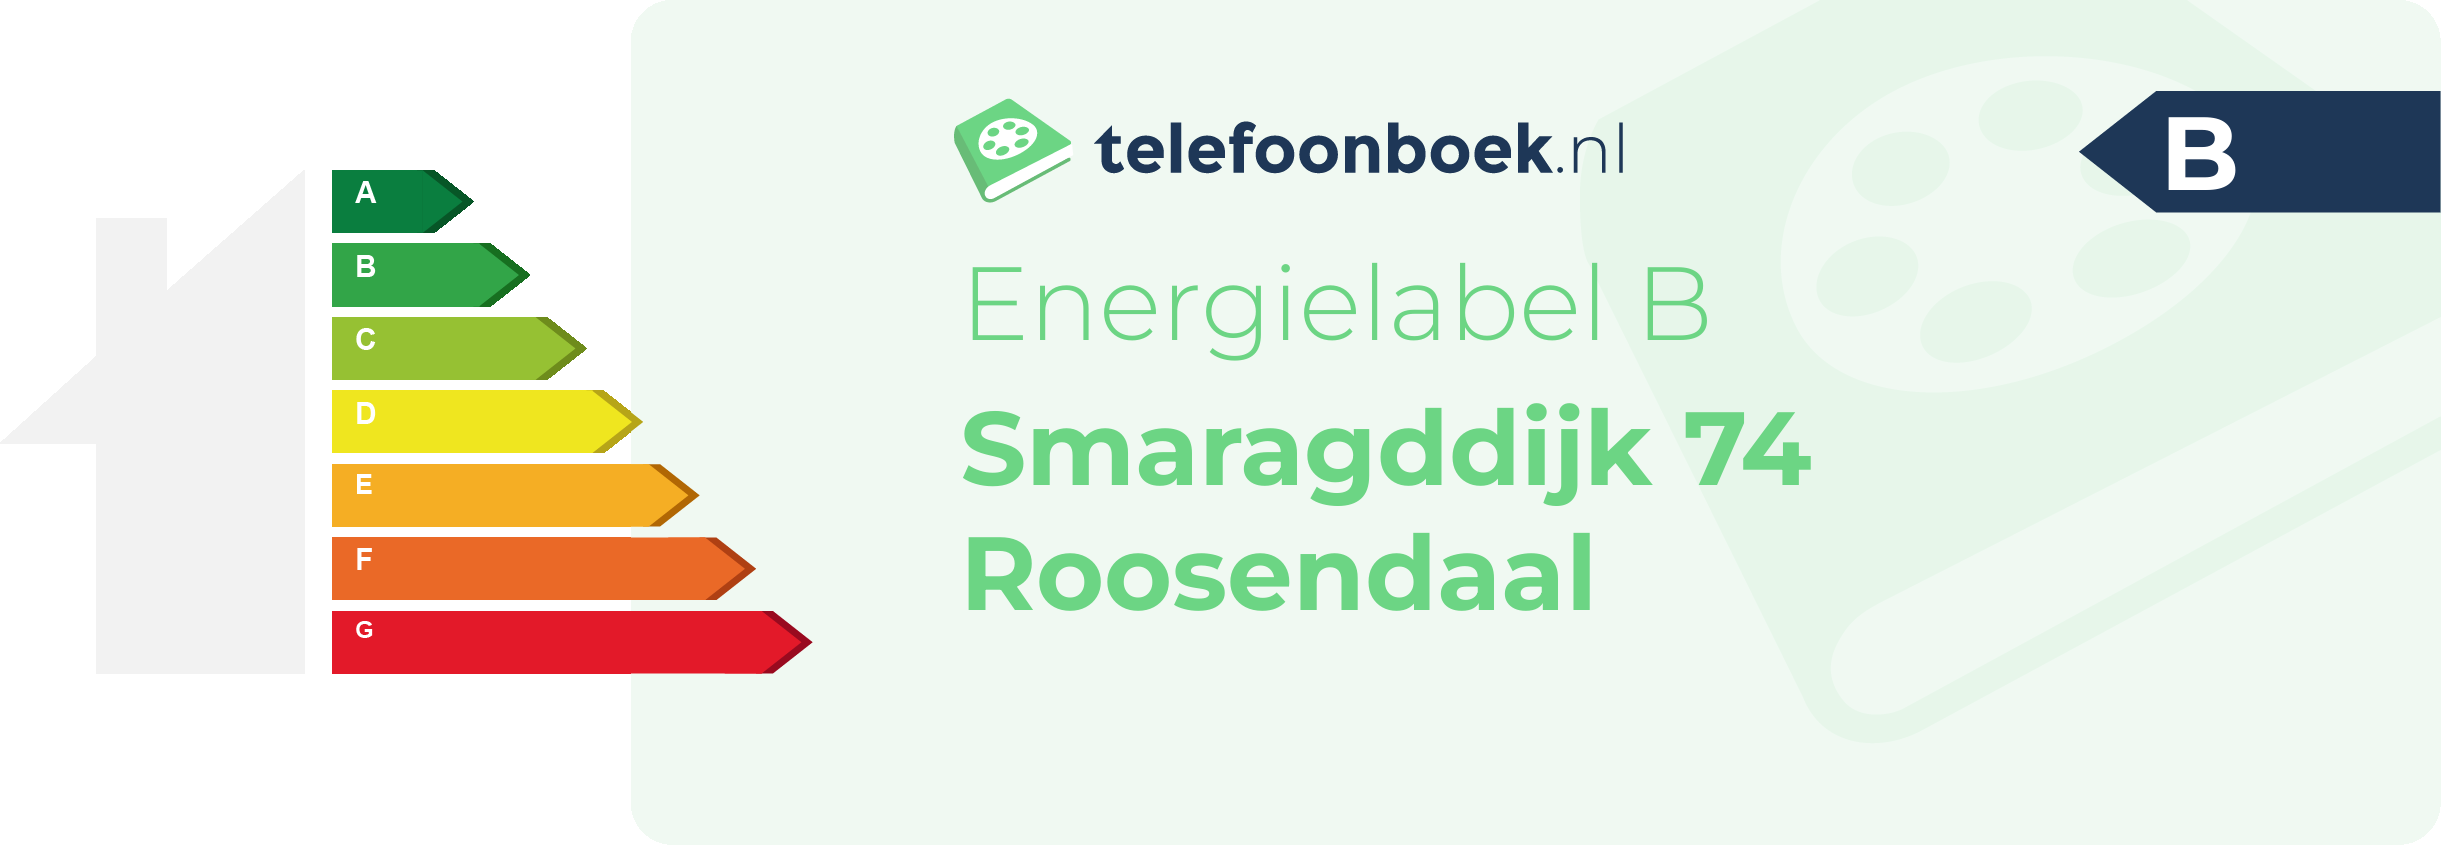 Energielabel Smaragddijk 74 Roosendaal